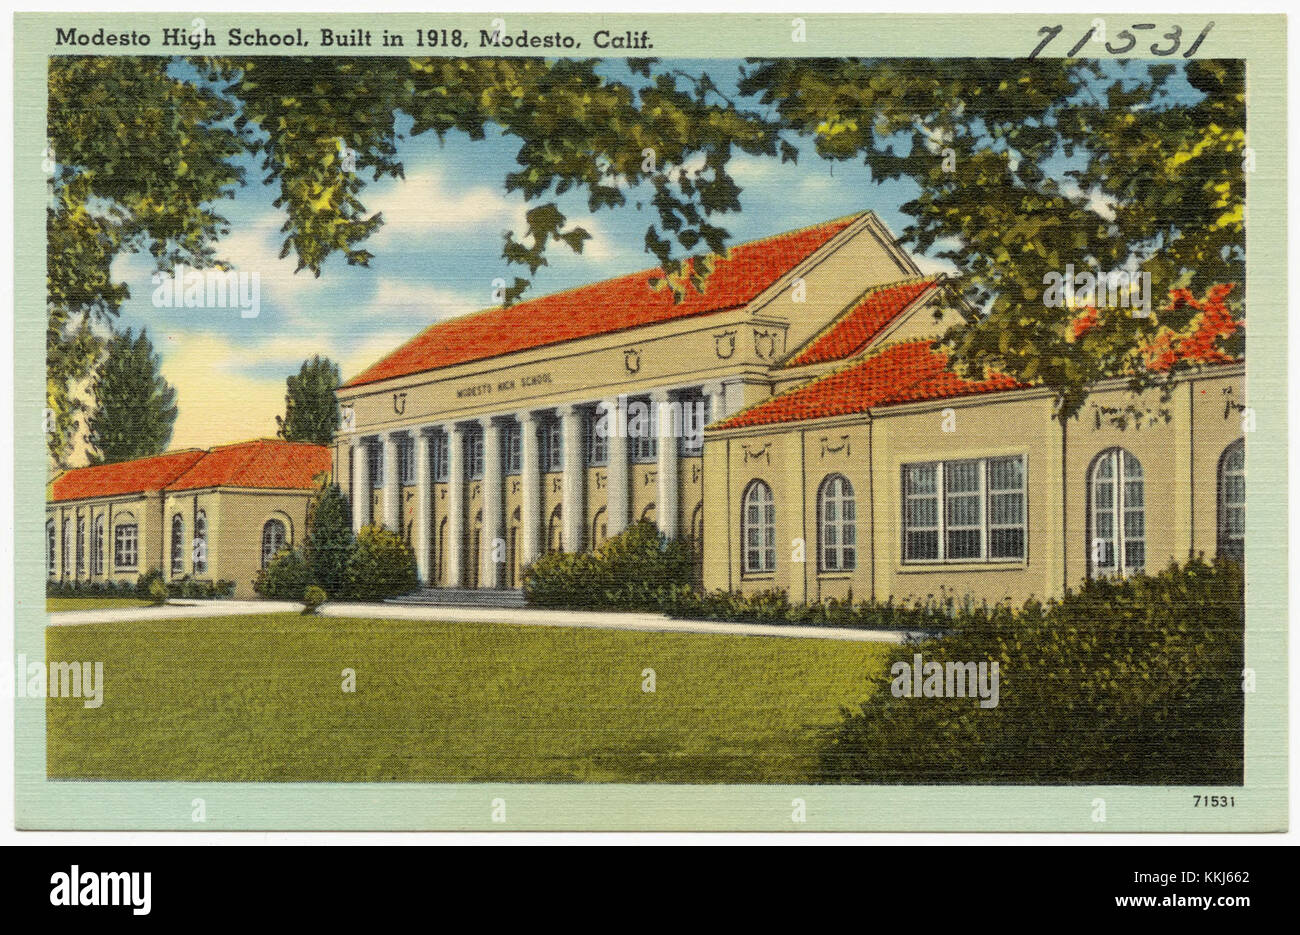 Modesto High School, Built in 1918, Modesto, Calif (71531) Stock Photo